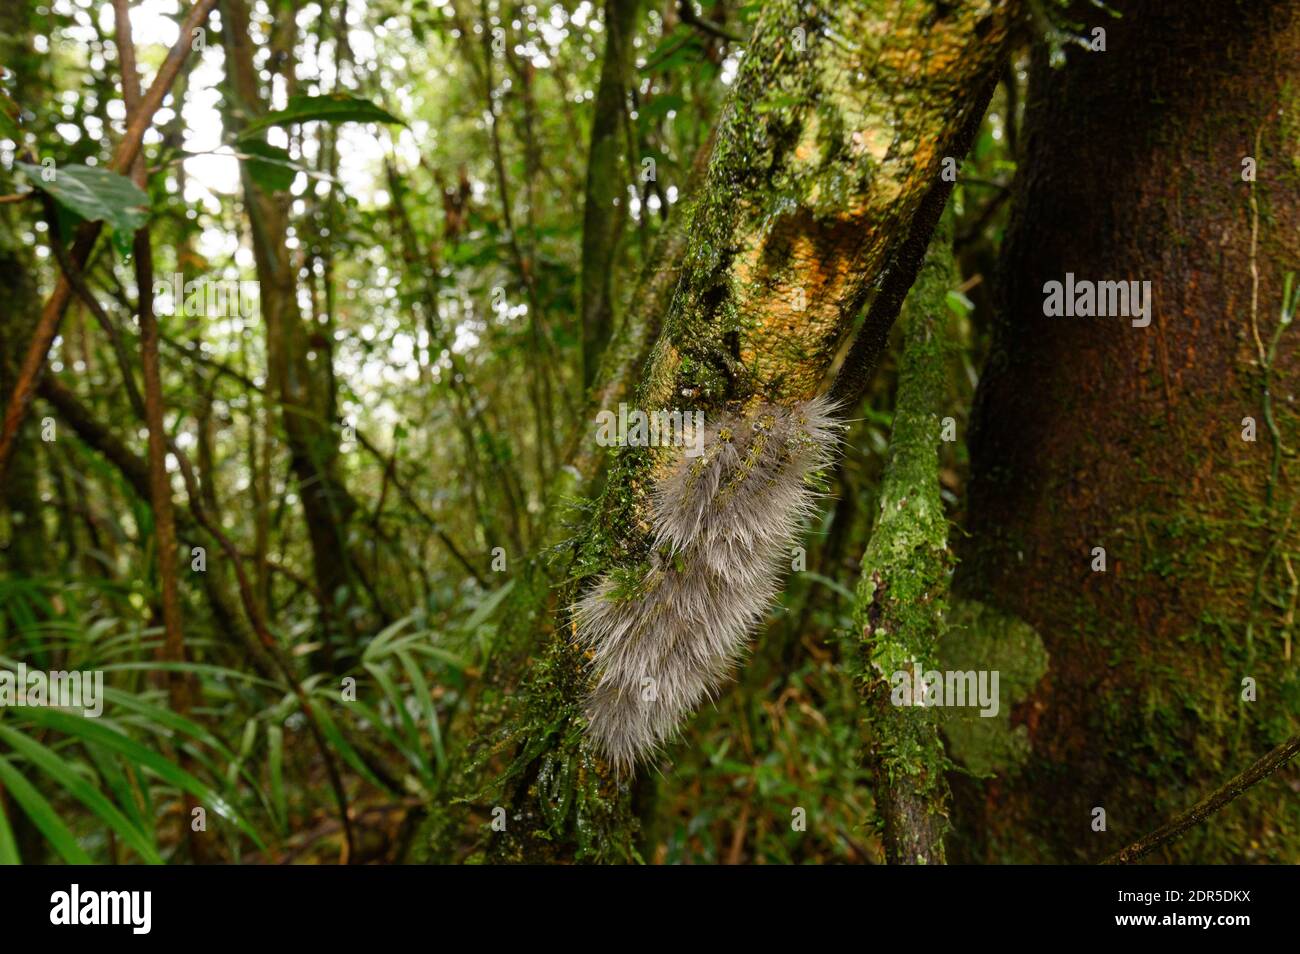 Carpet of hairy caterpillars on tree trunk, Ranomafana National Park, Madagascar Stock Photo